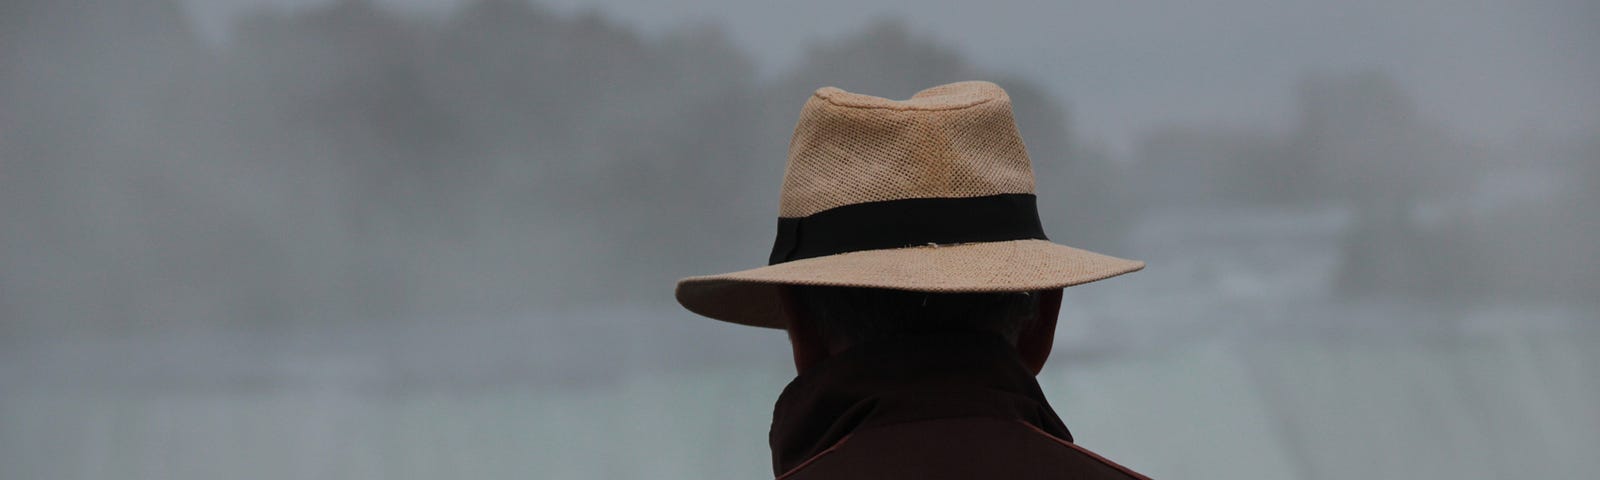 Man in hat, foggy background